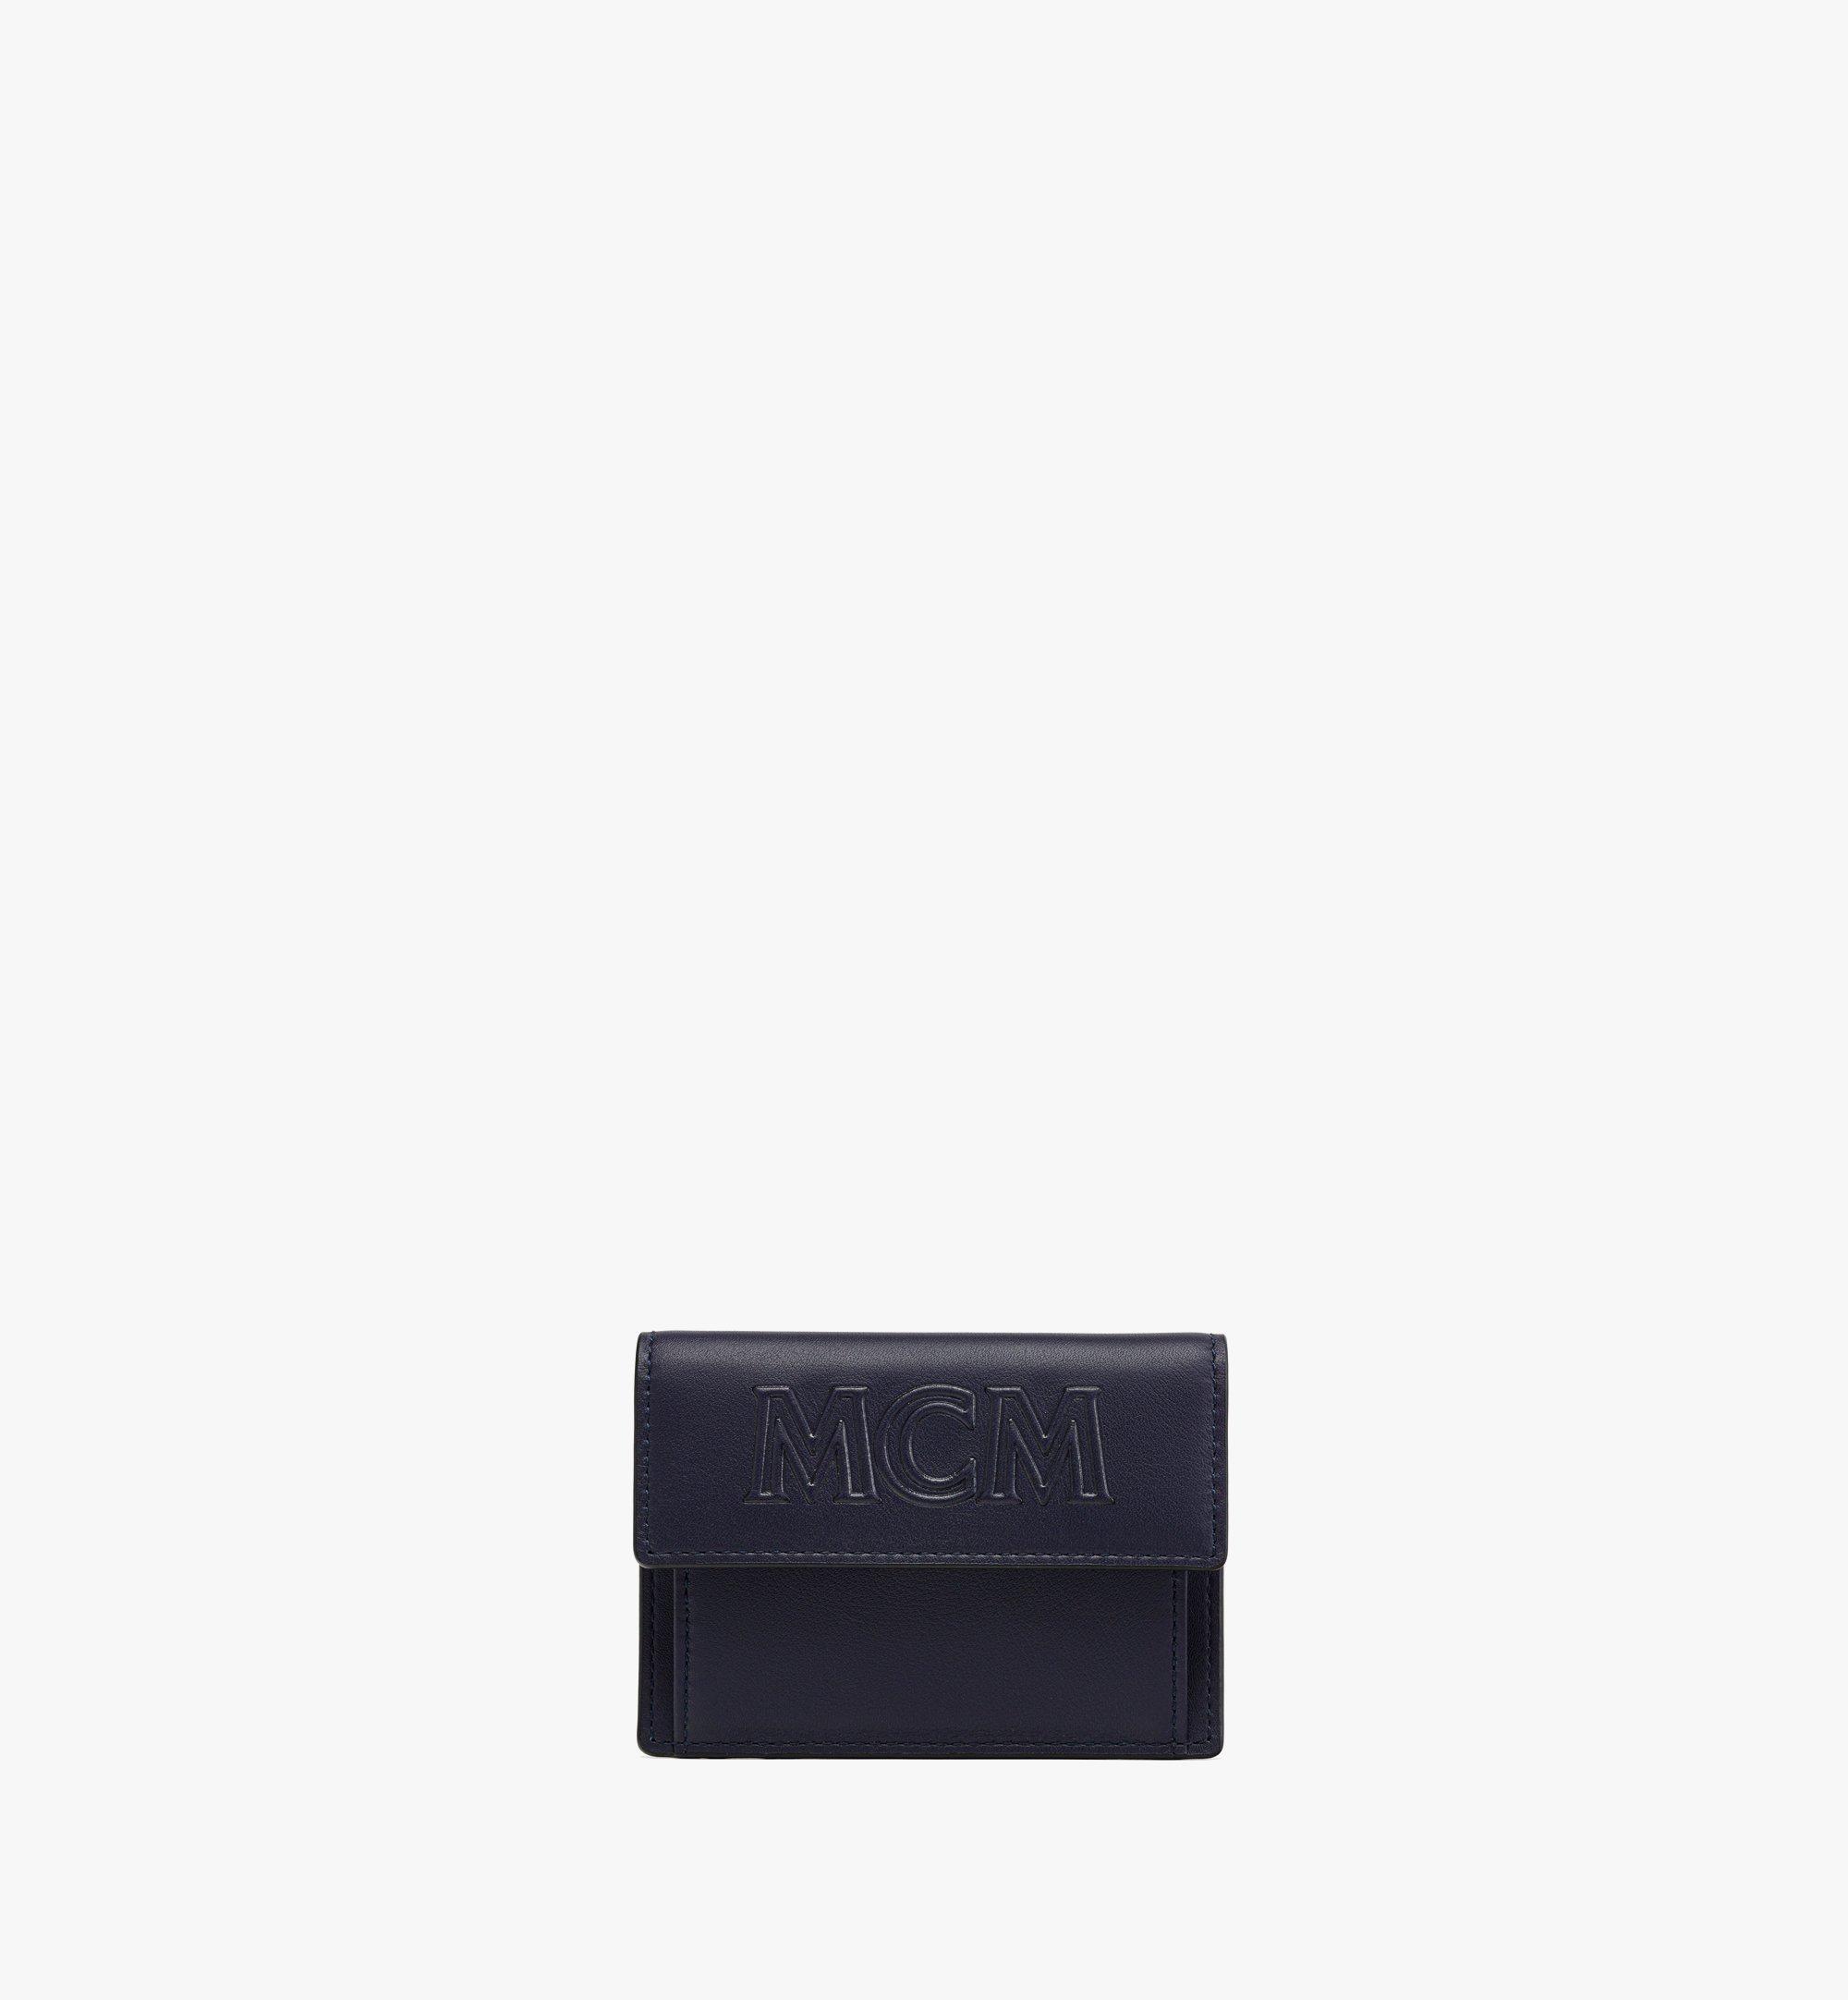 MCM Wallet - Key Pouch Logo Leather - Black Purple